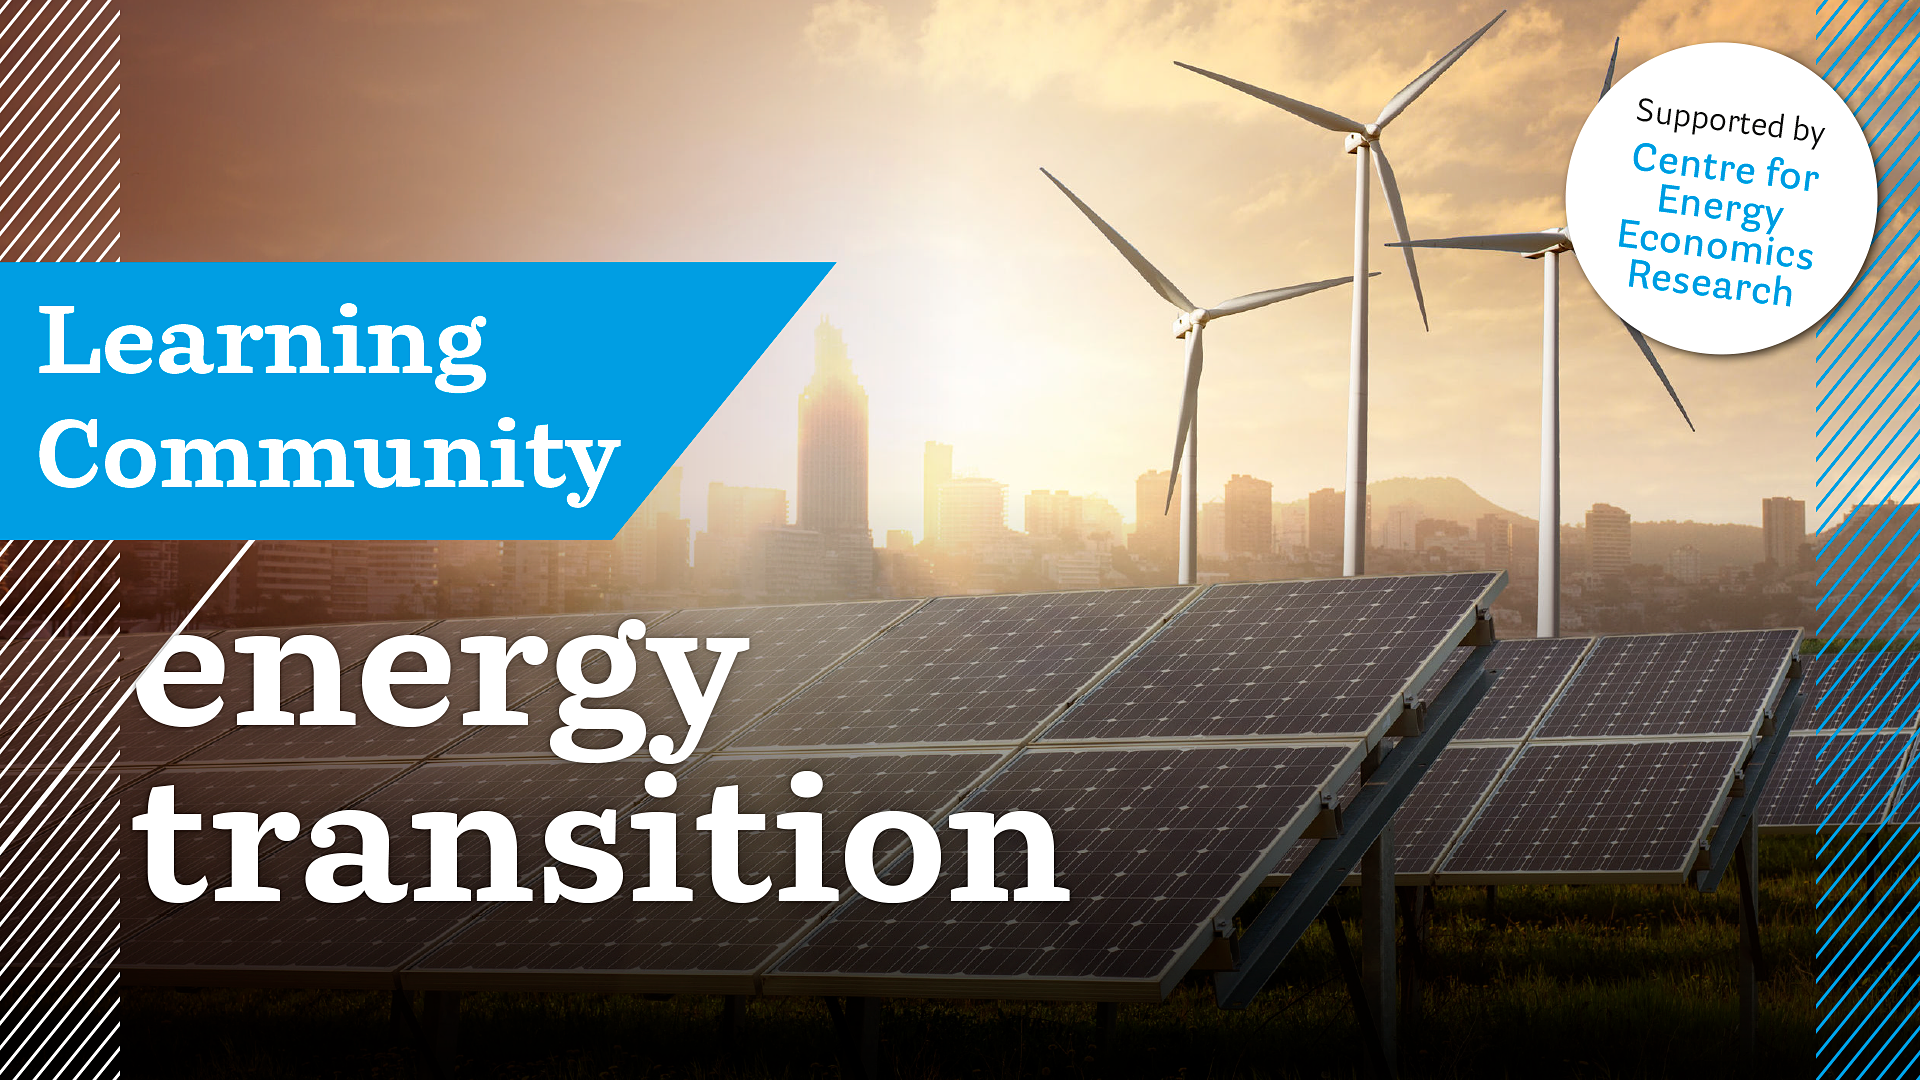 Learning Community Energy transition